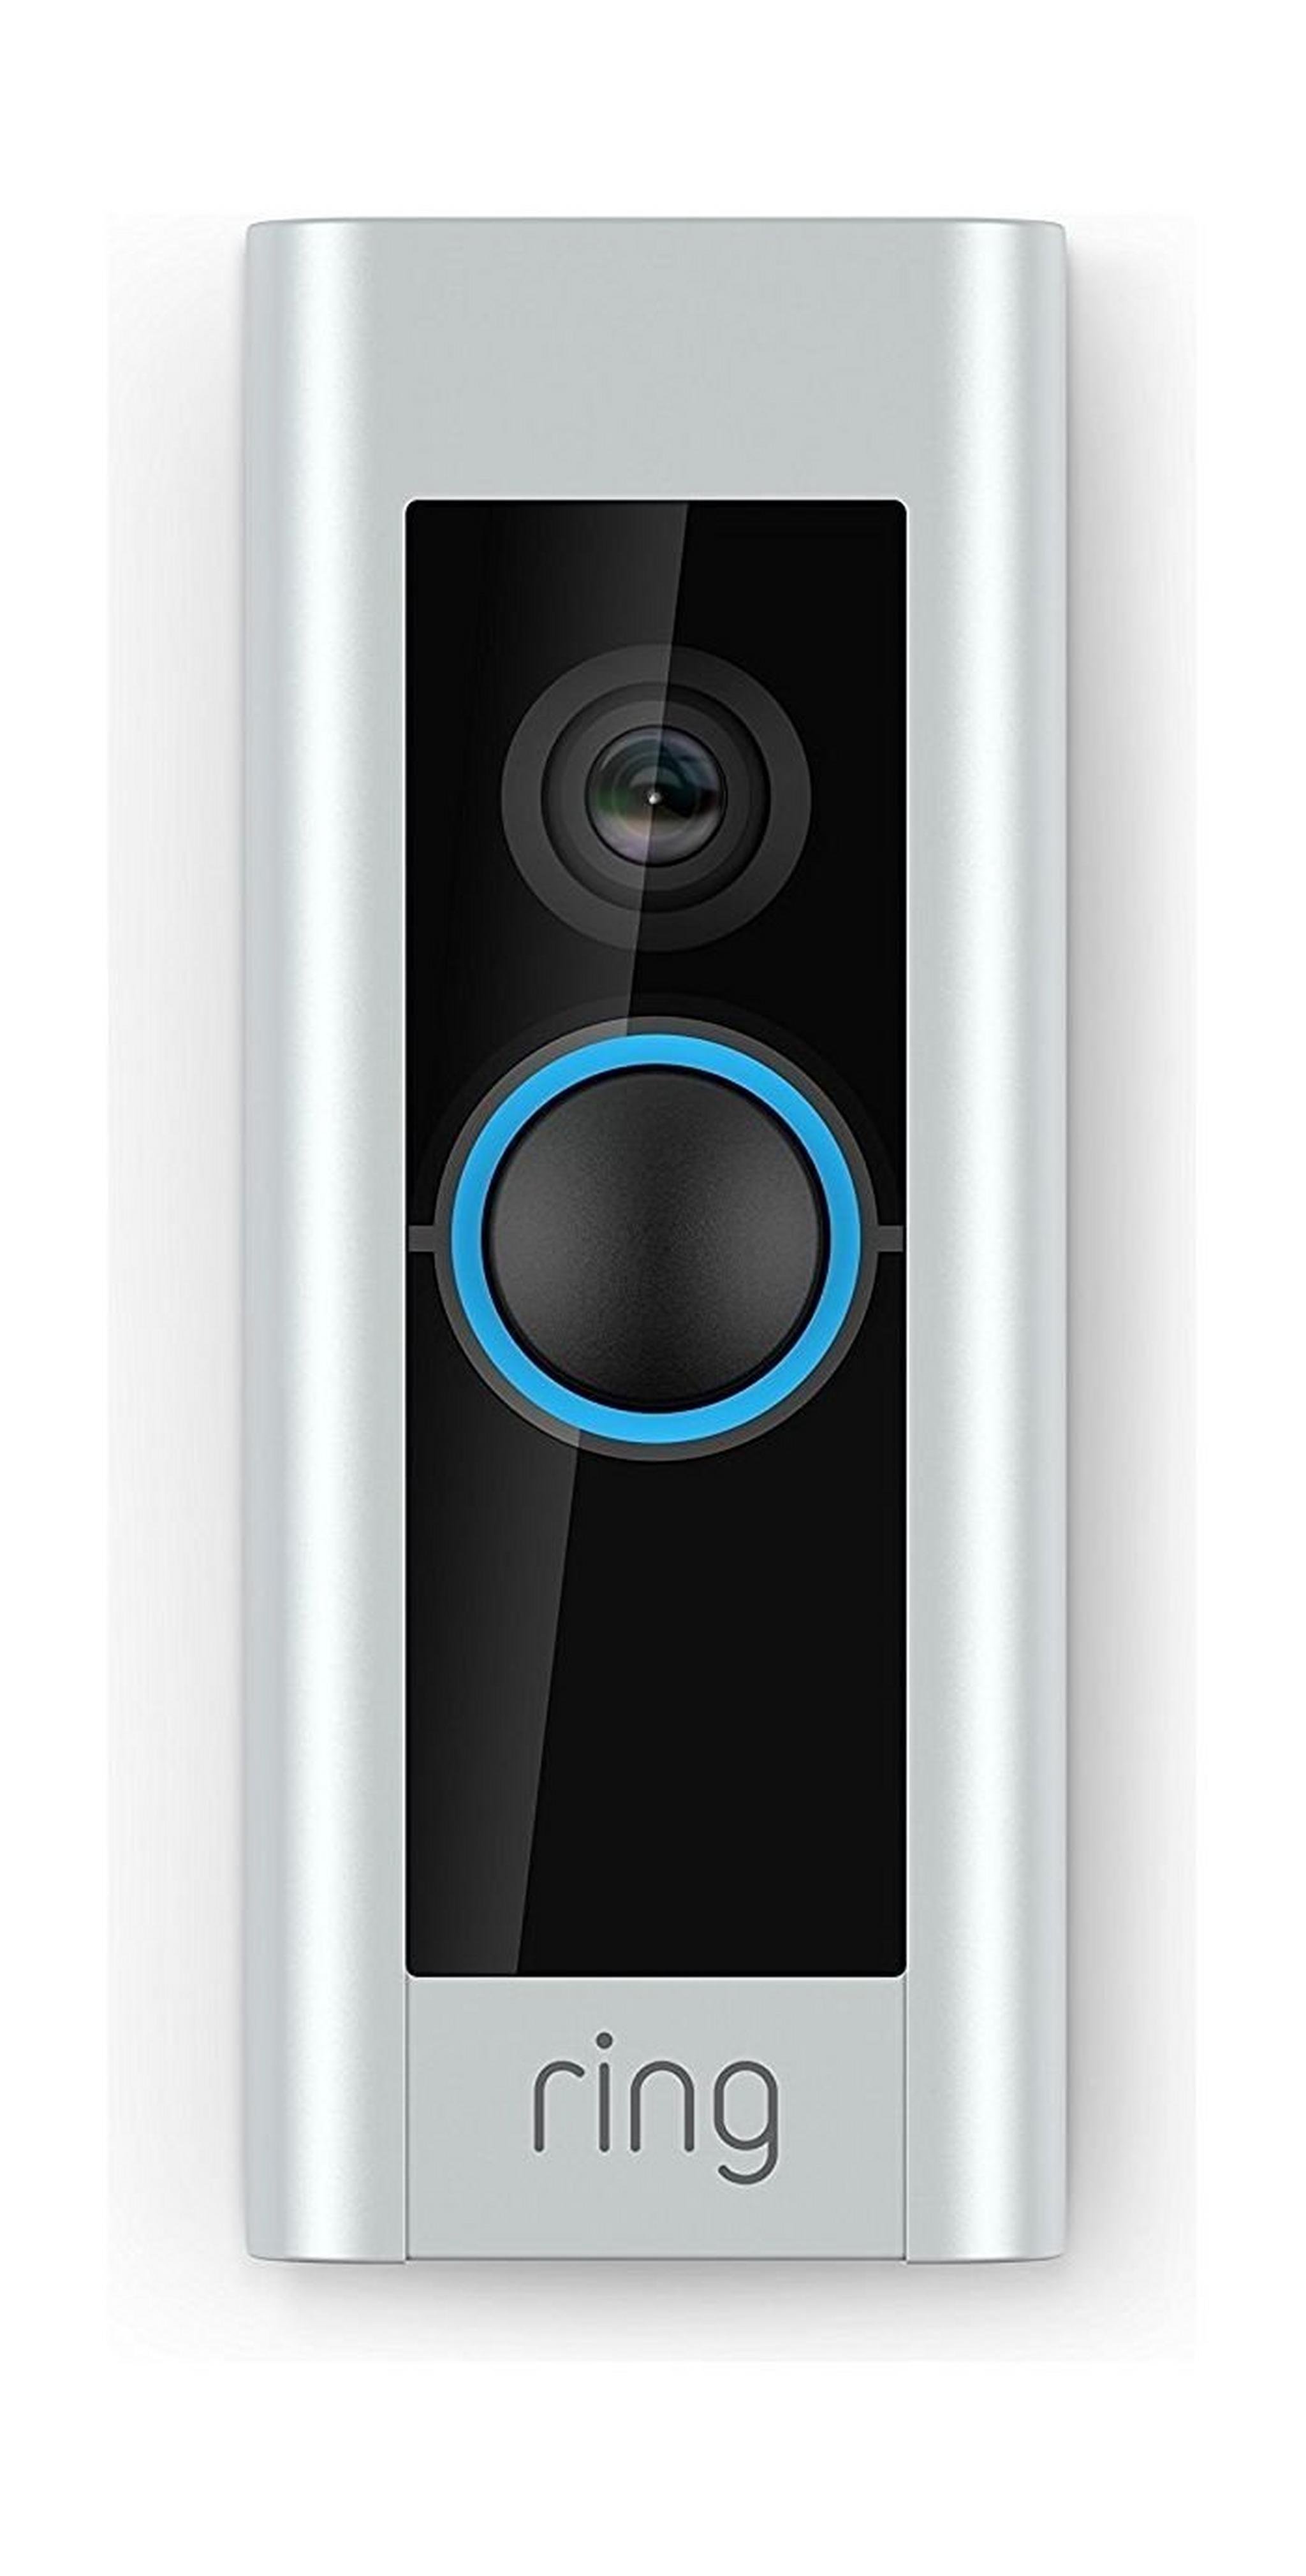 Ring Video DoorBell Pro - Hardwired Wi-Fi Doorbell Security Camera